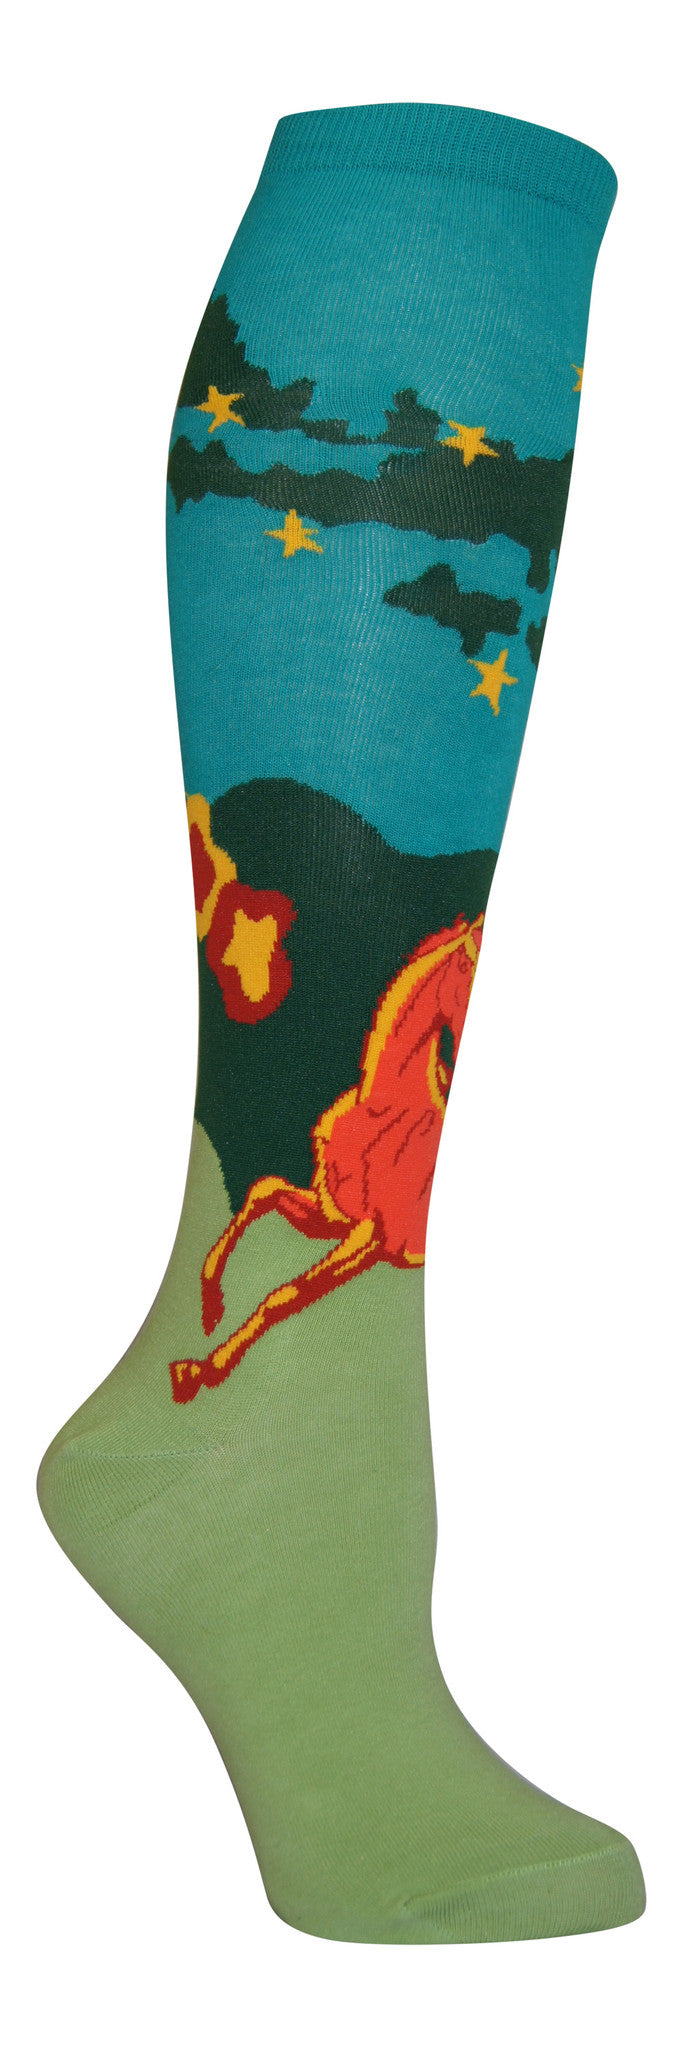 "Snarky Stars" cotton-rich knee sock from lucky7socks.com